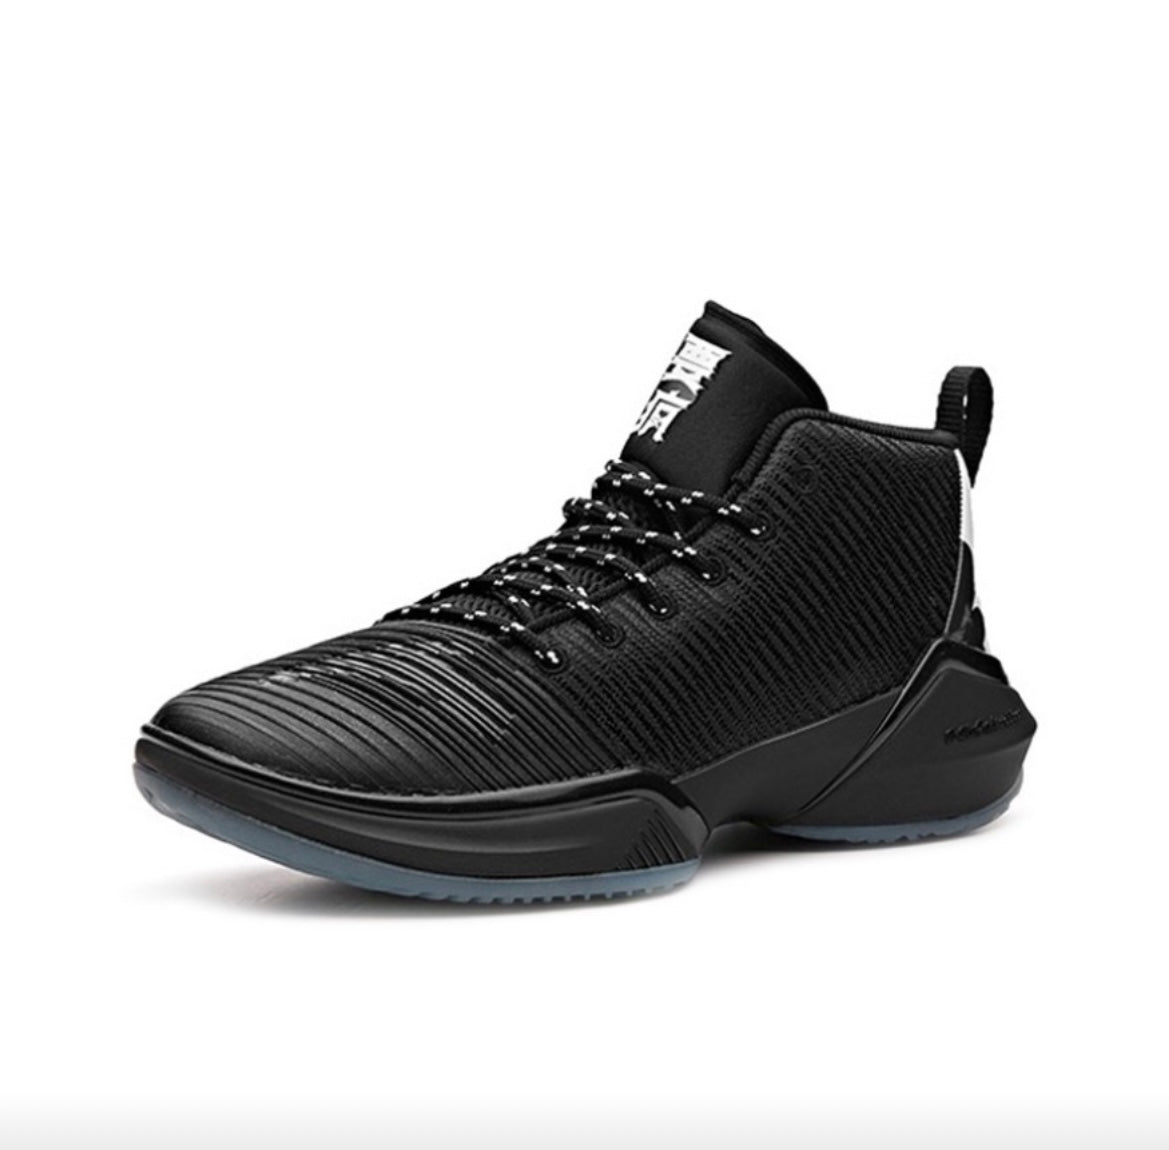 Klay Thompson x Anta Shock The Game 2.0 Basketball Shoes - Black